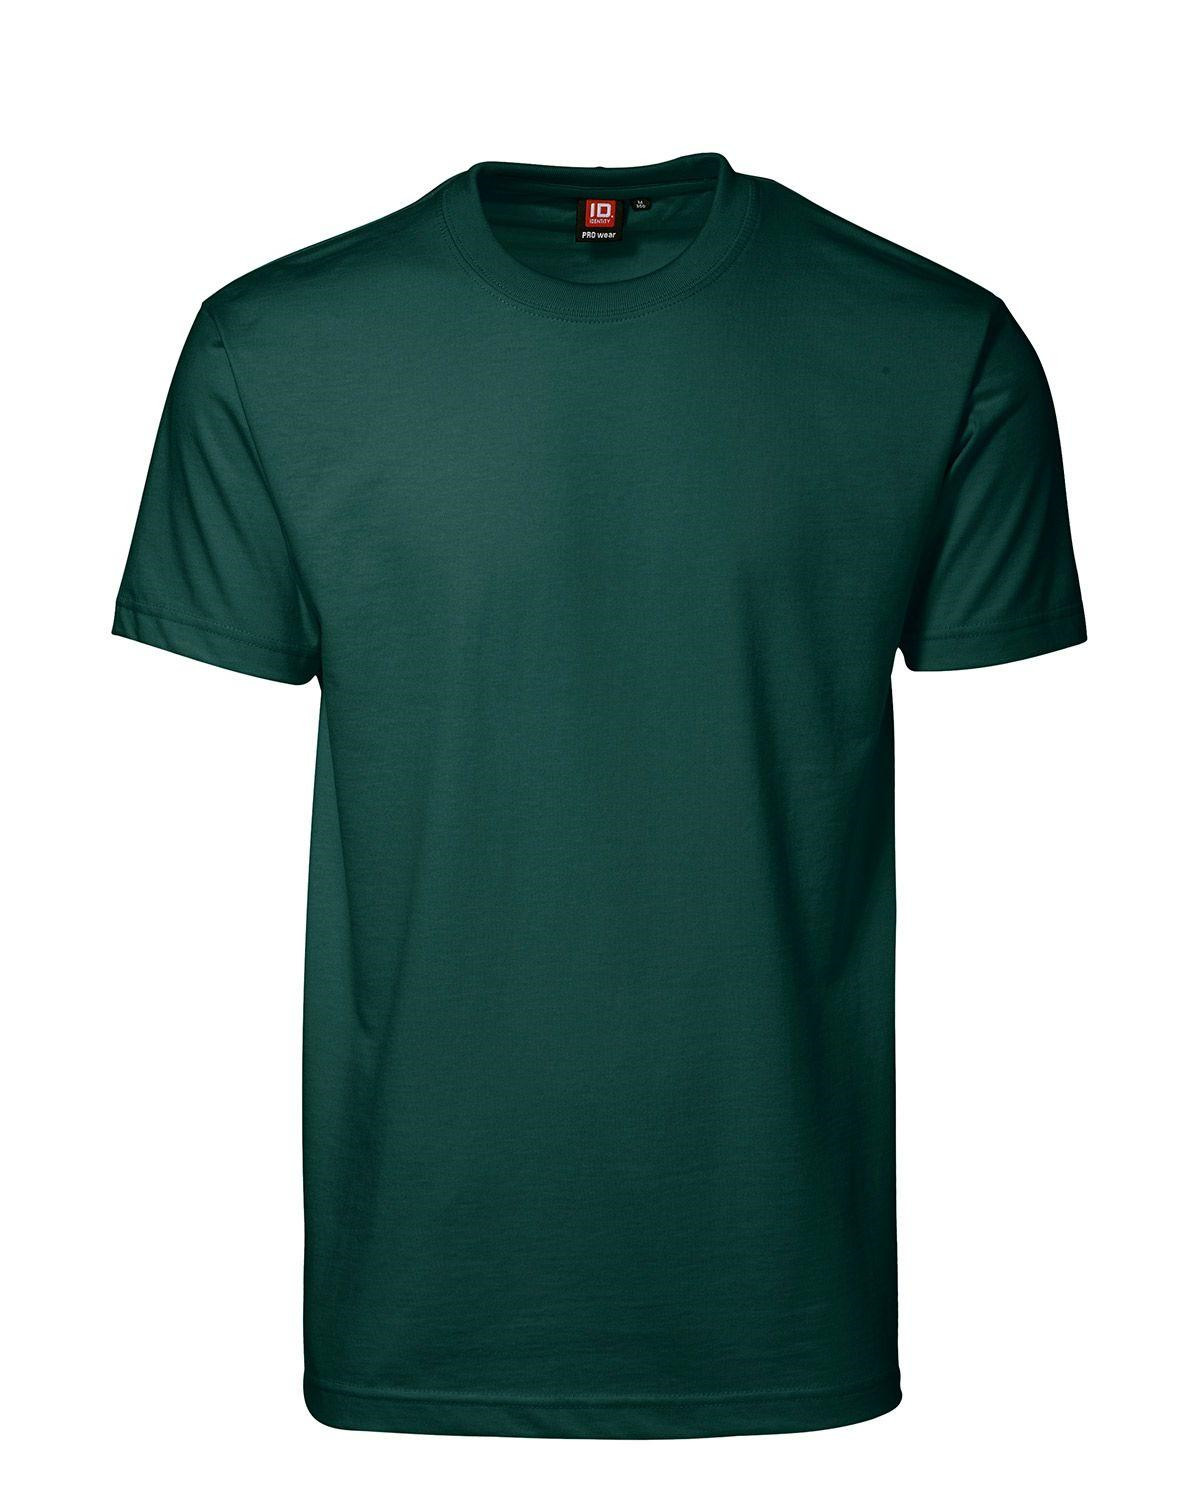 ID PRO Wear T-shirt til Herre (Flaskegrøn, L)